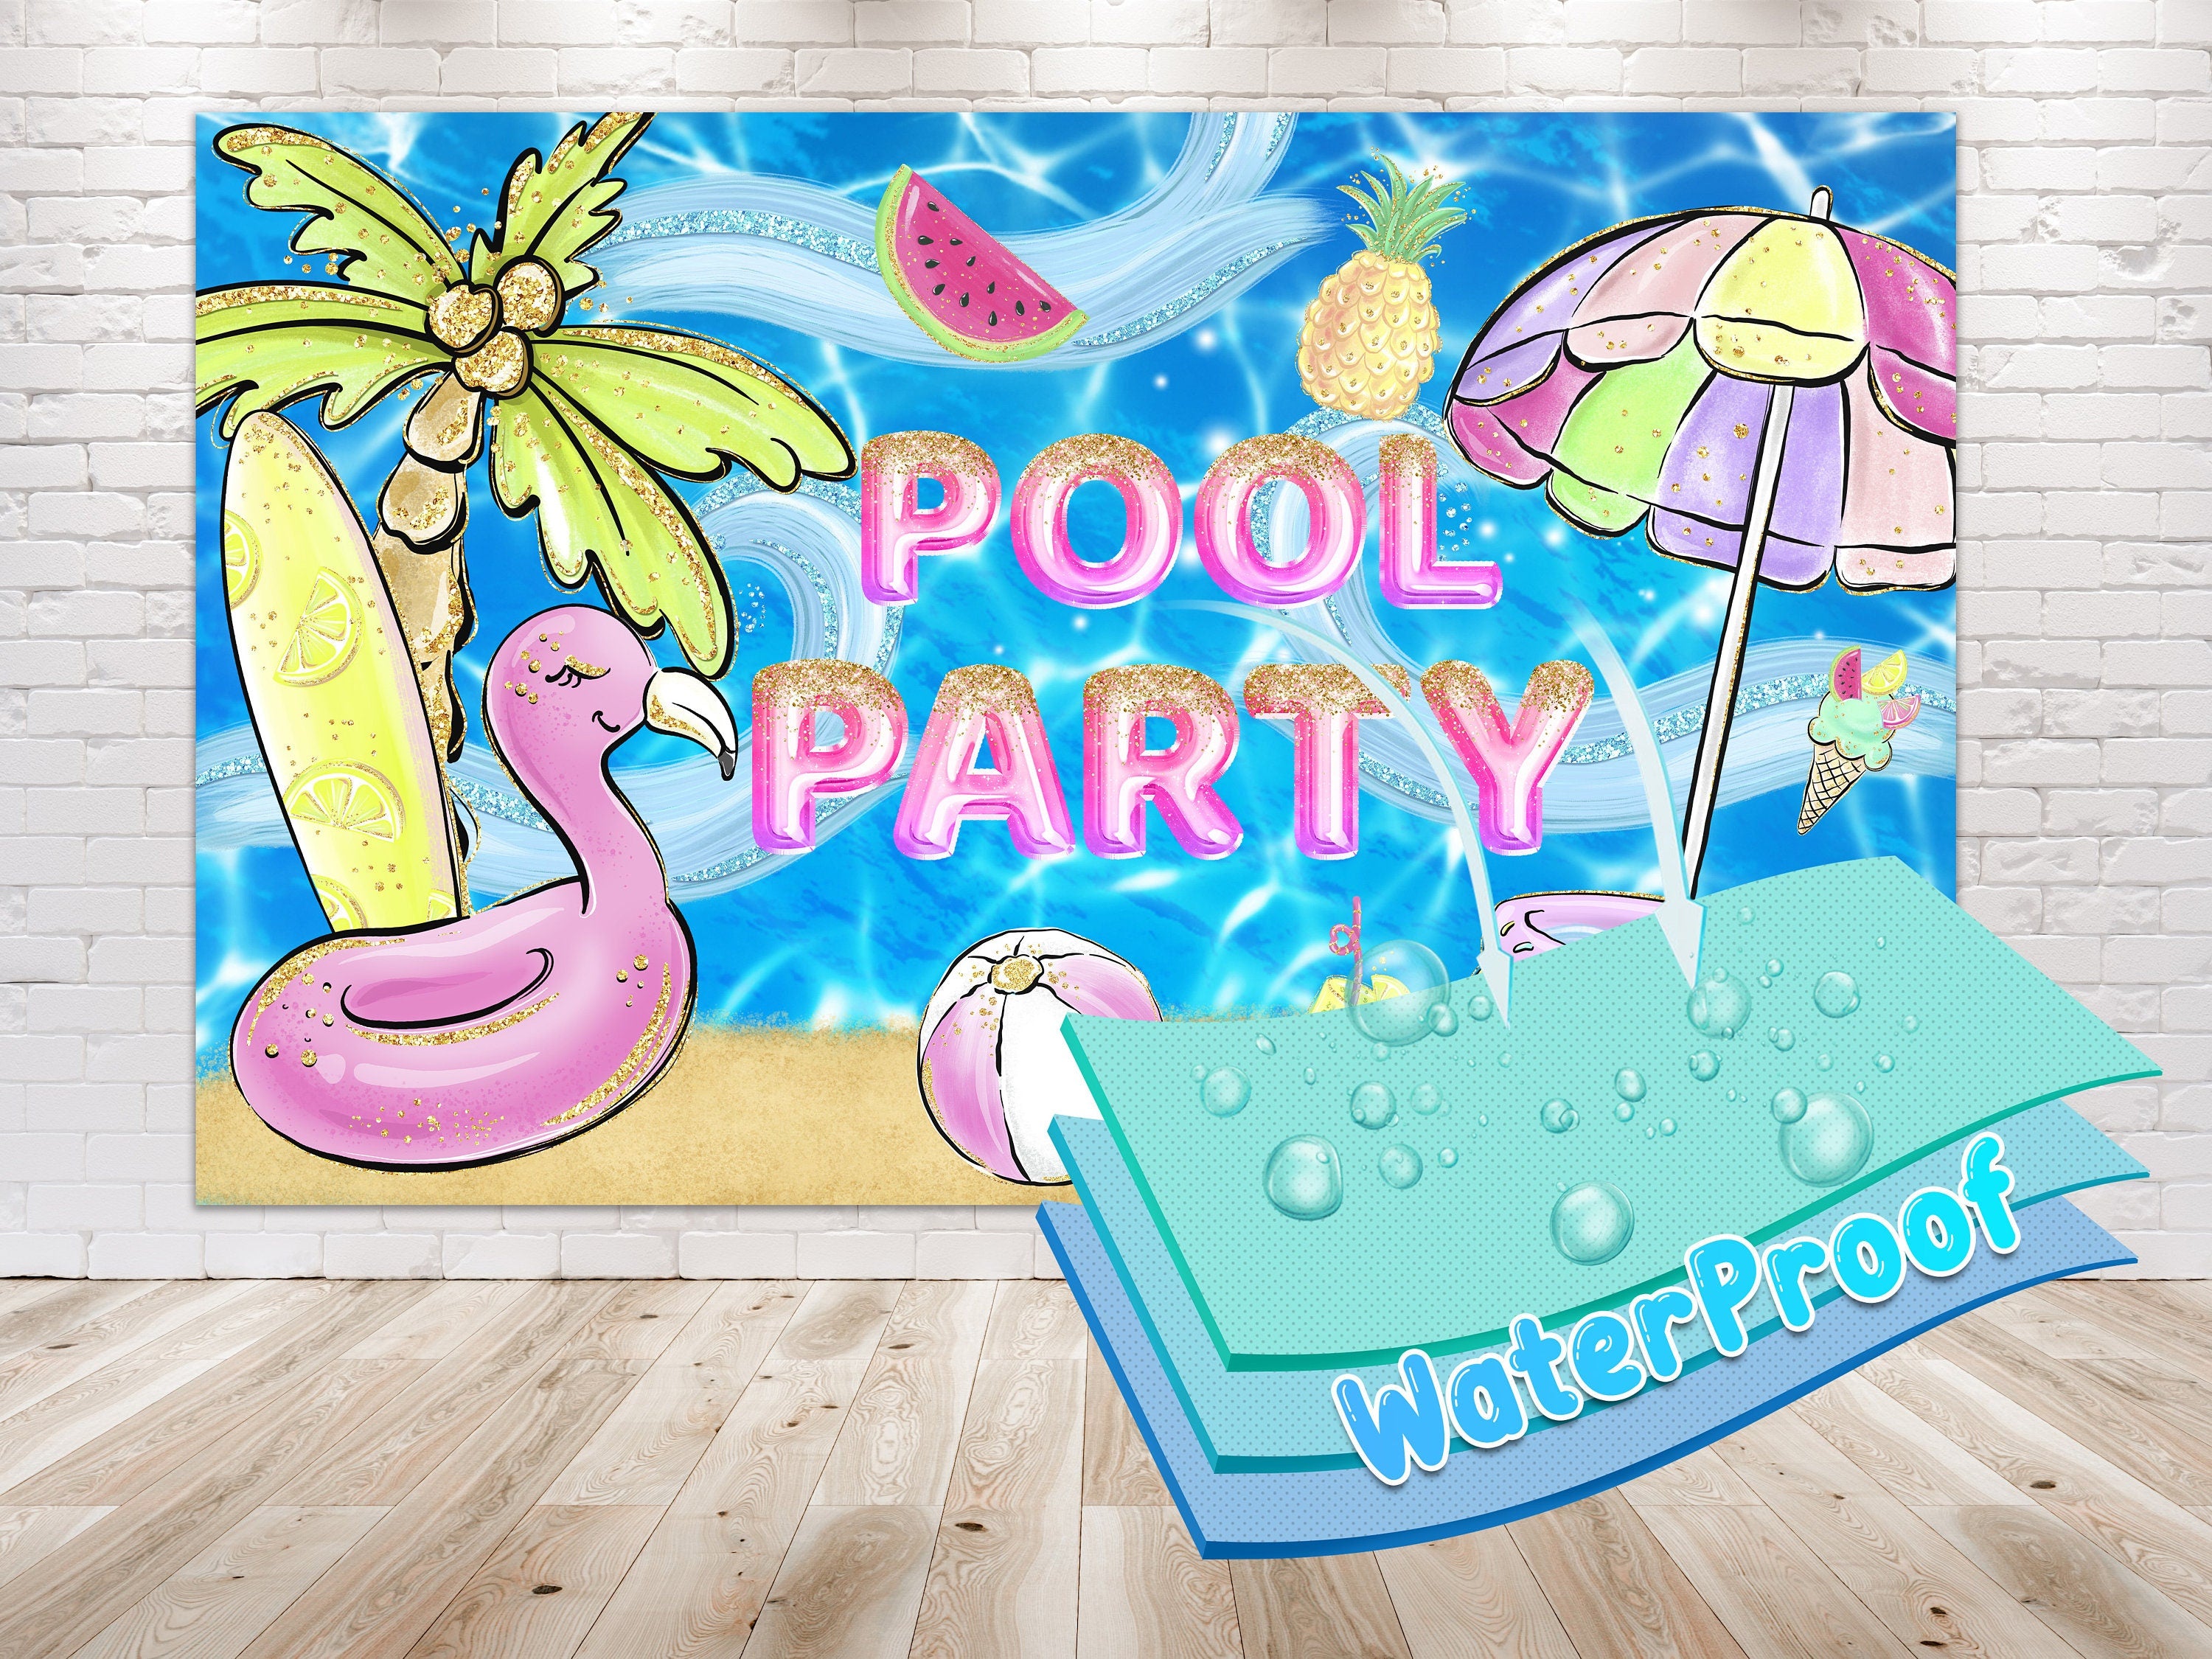 Pool Party Birthday Backdrop 5x3 FT